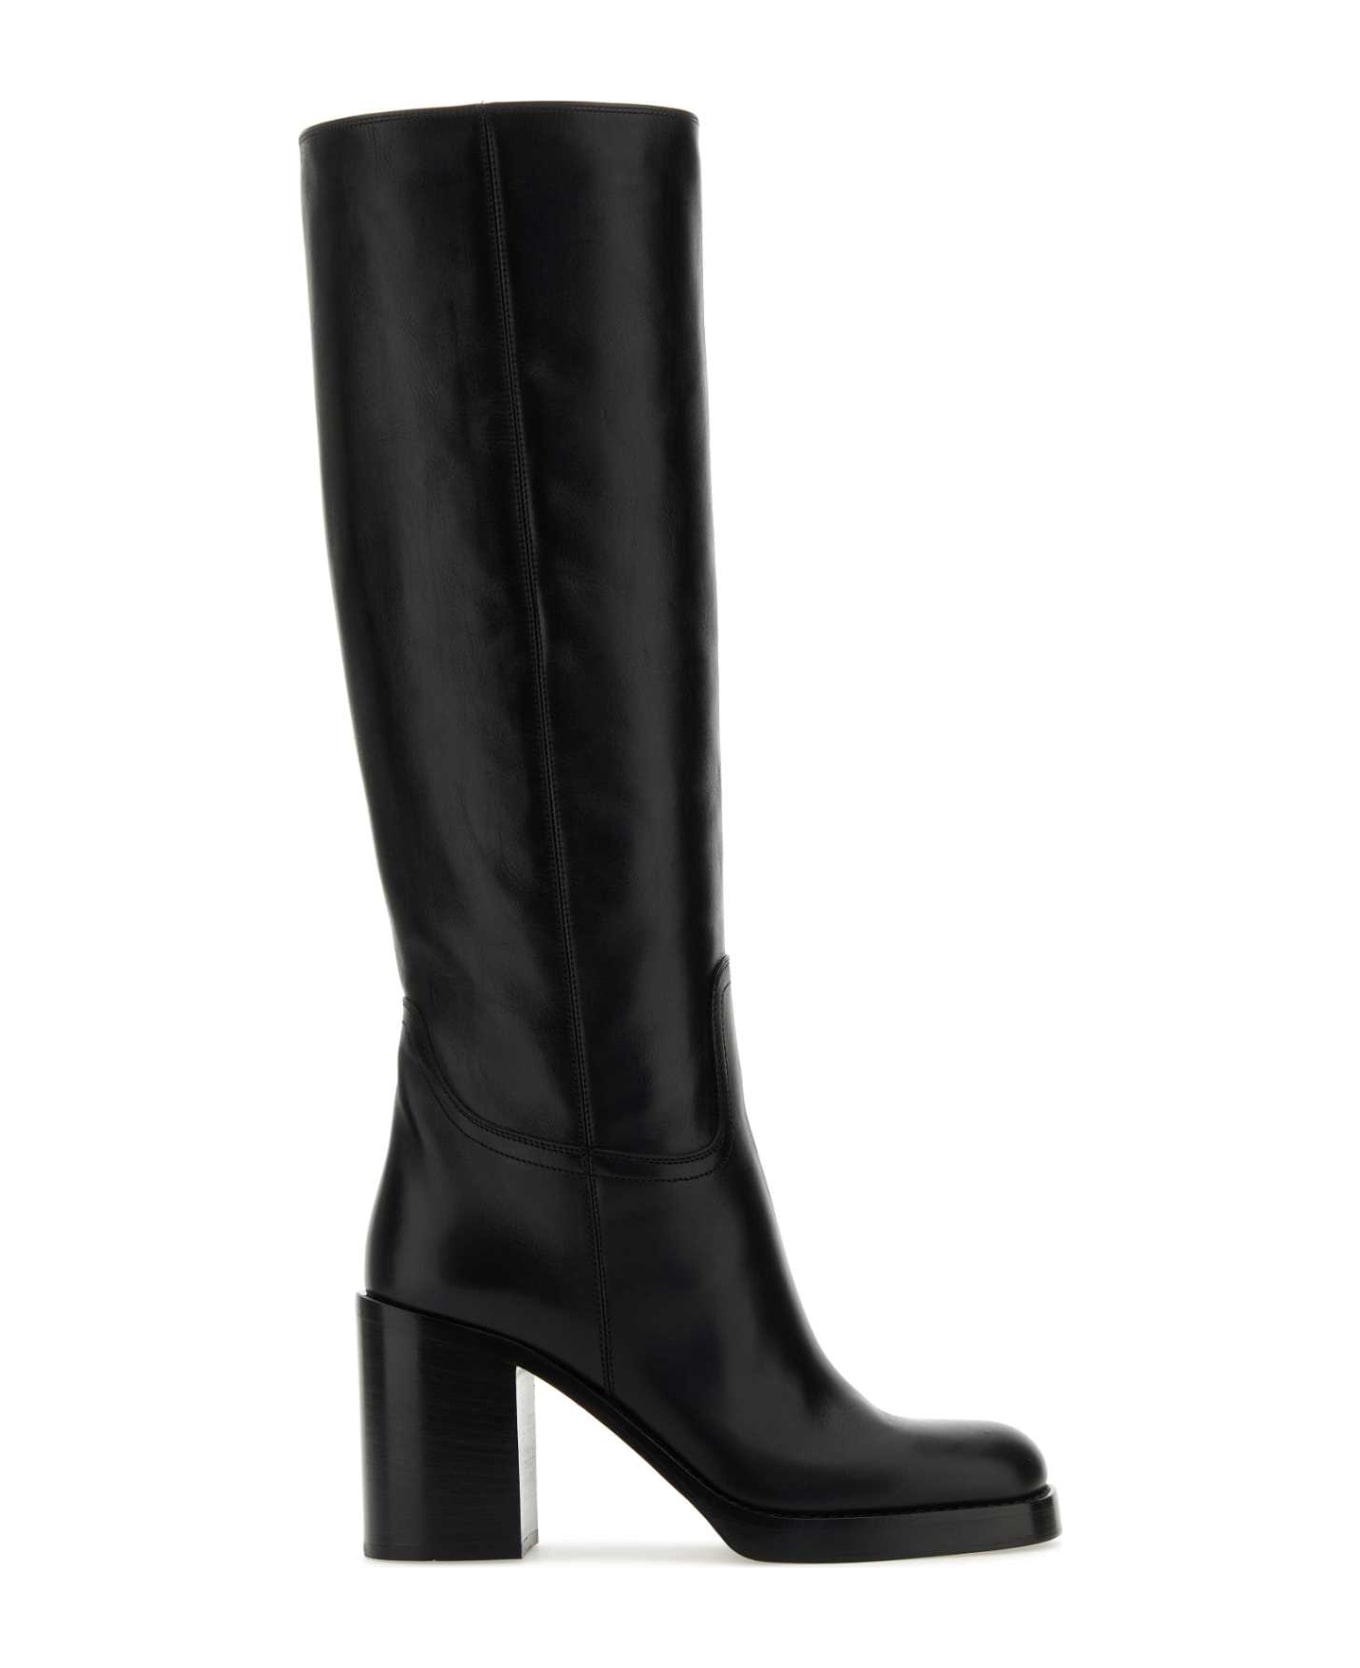 Prada Black Leather Boots - NERO